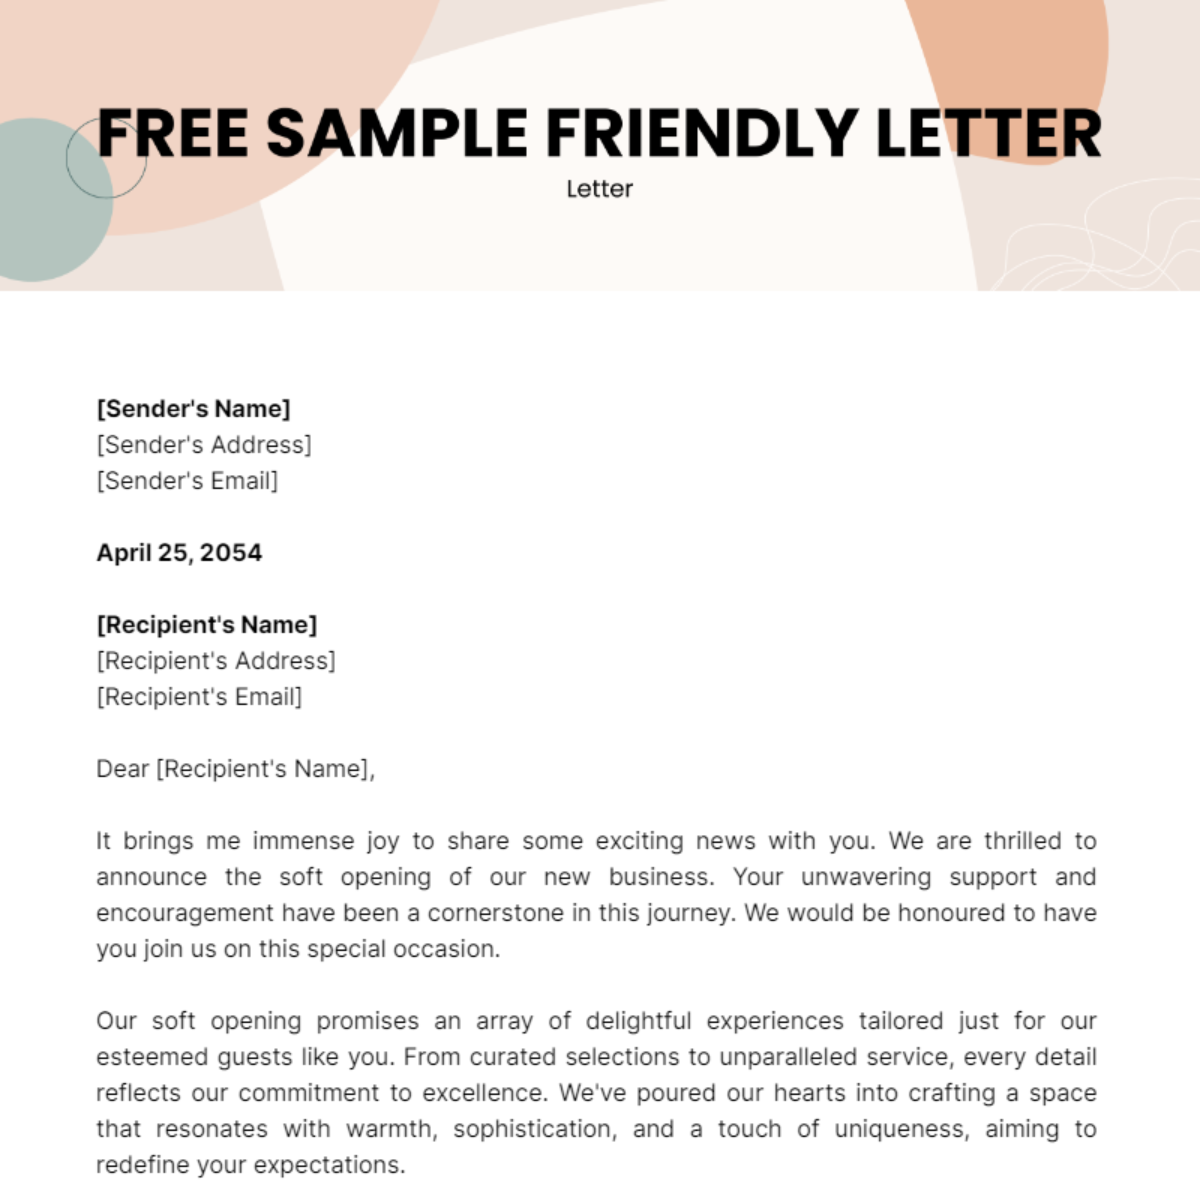 Sample Friendly Letter Template